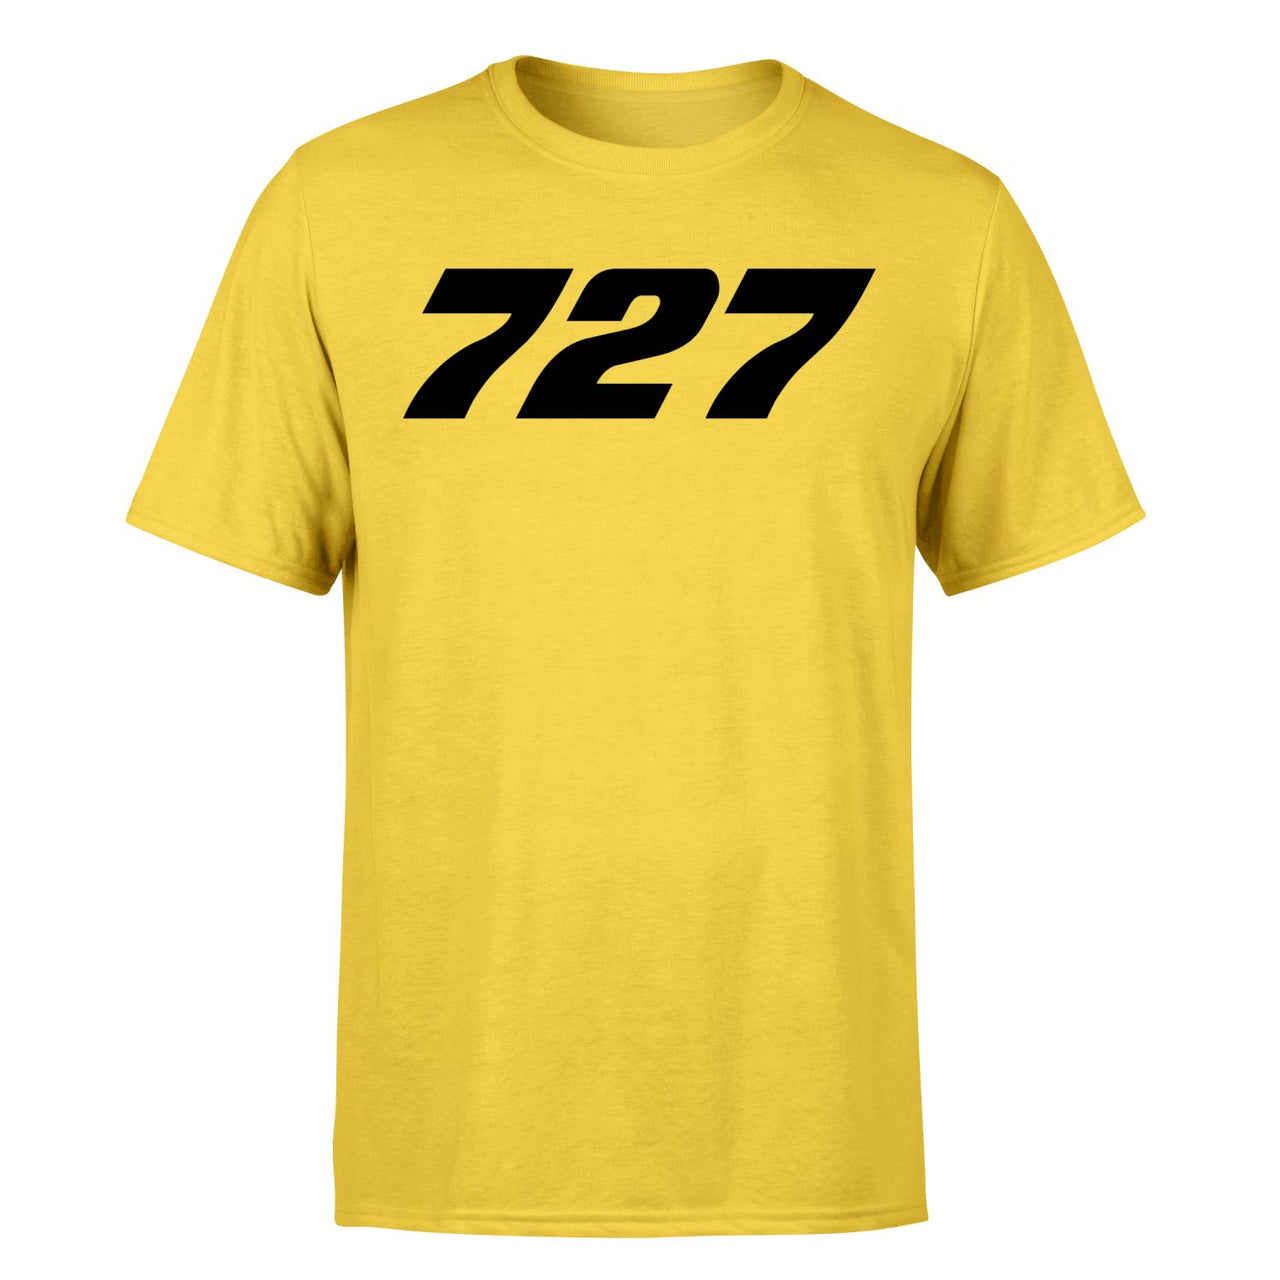 727 Flat Text Designed T-Shirts